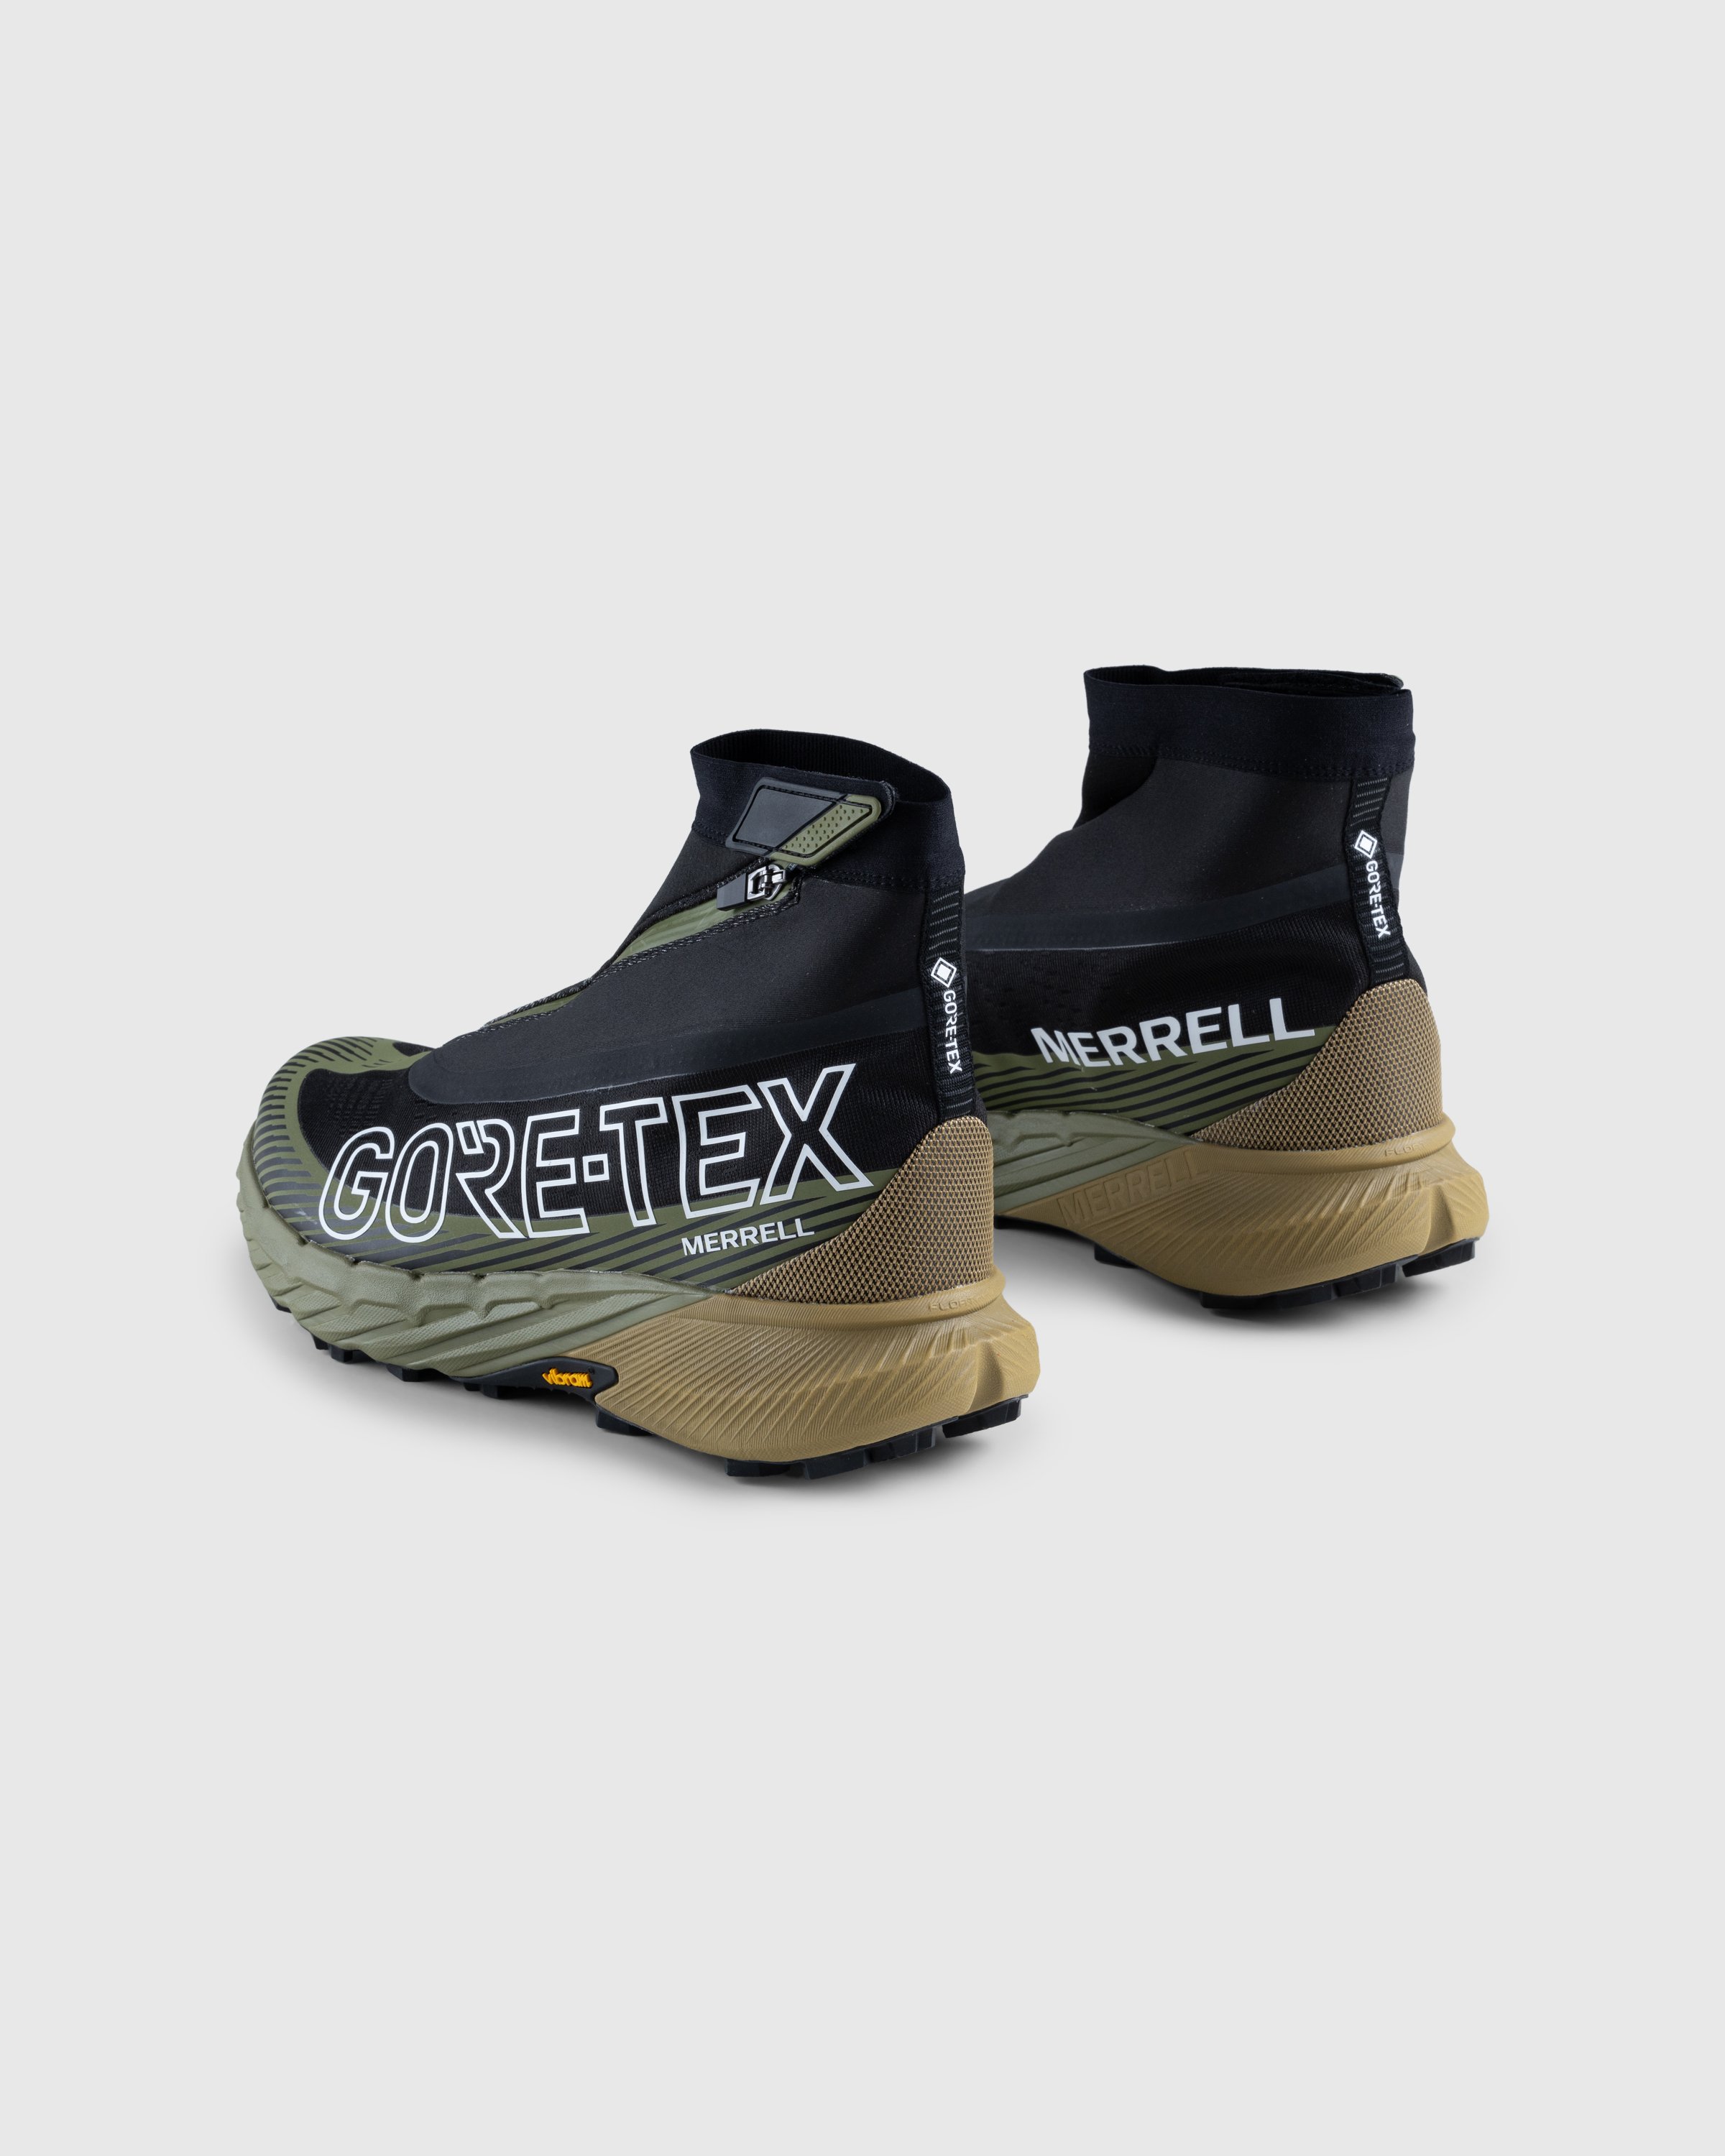 Merrell - Agility Peak 5 Zero GORE-TEX Black/Avocado - Footwear - Multi - Image 4